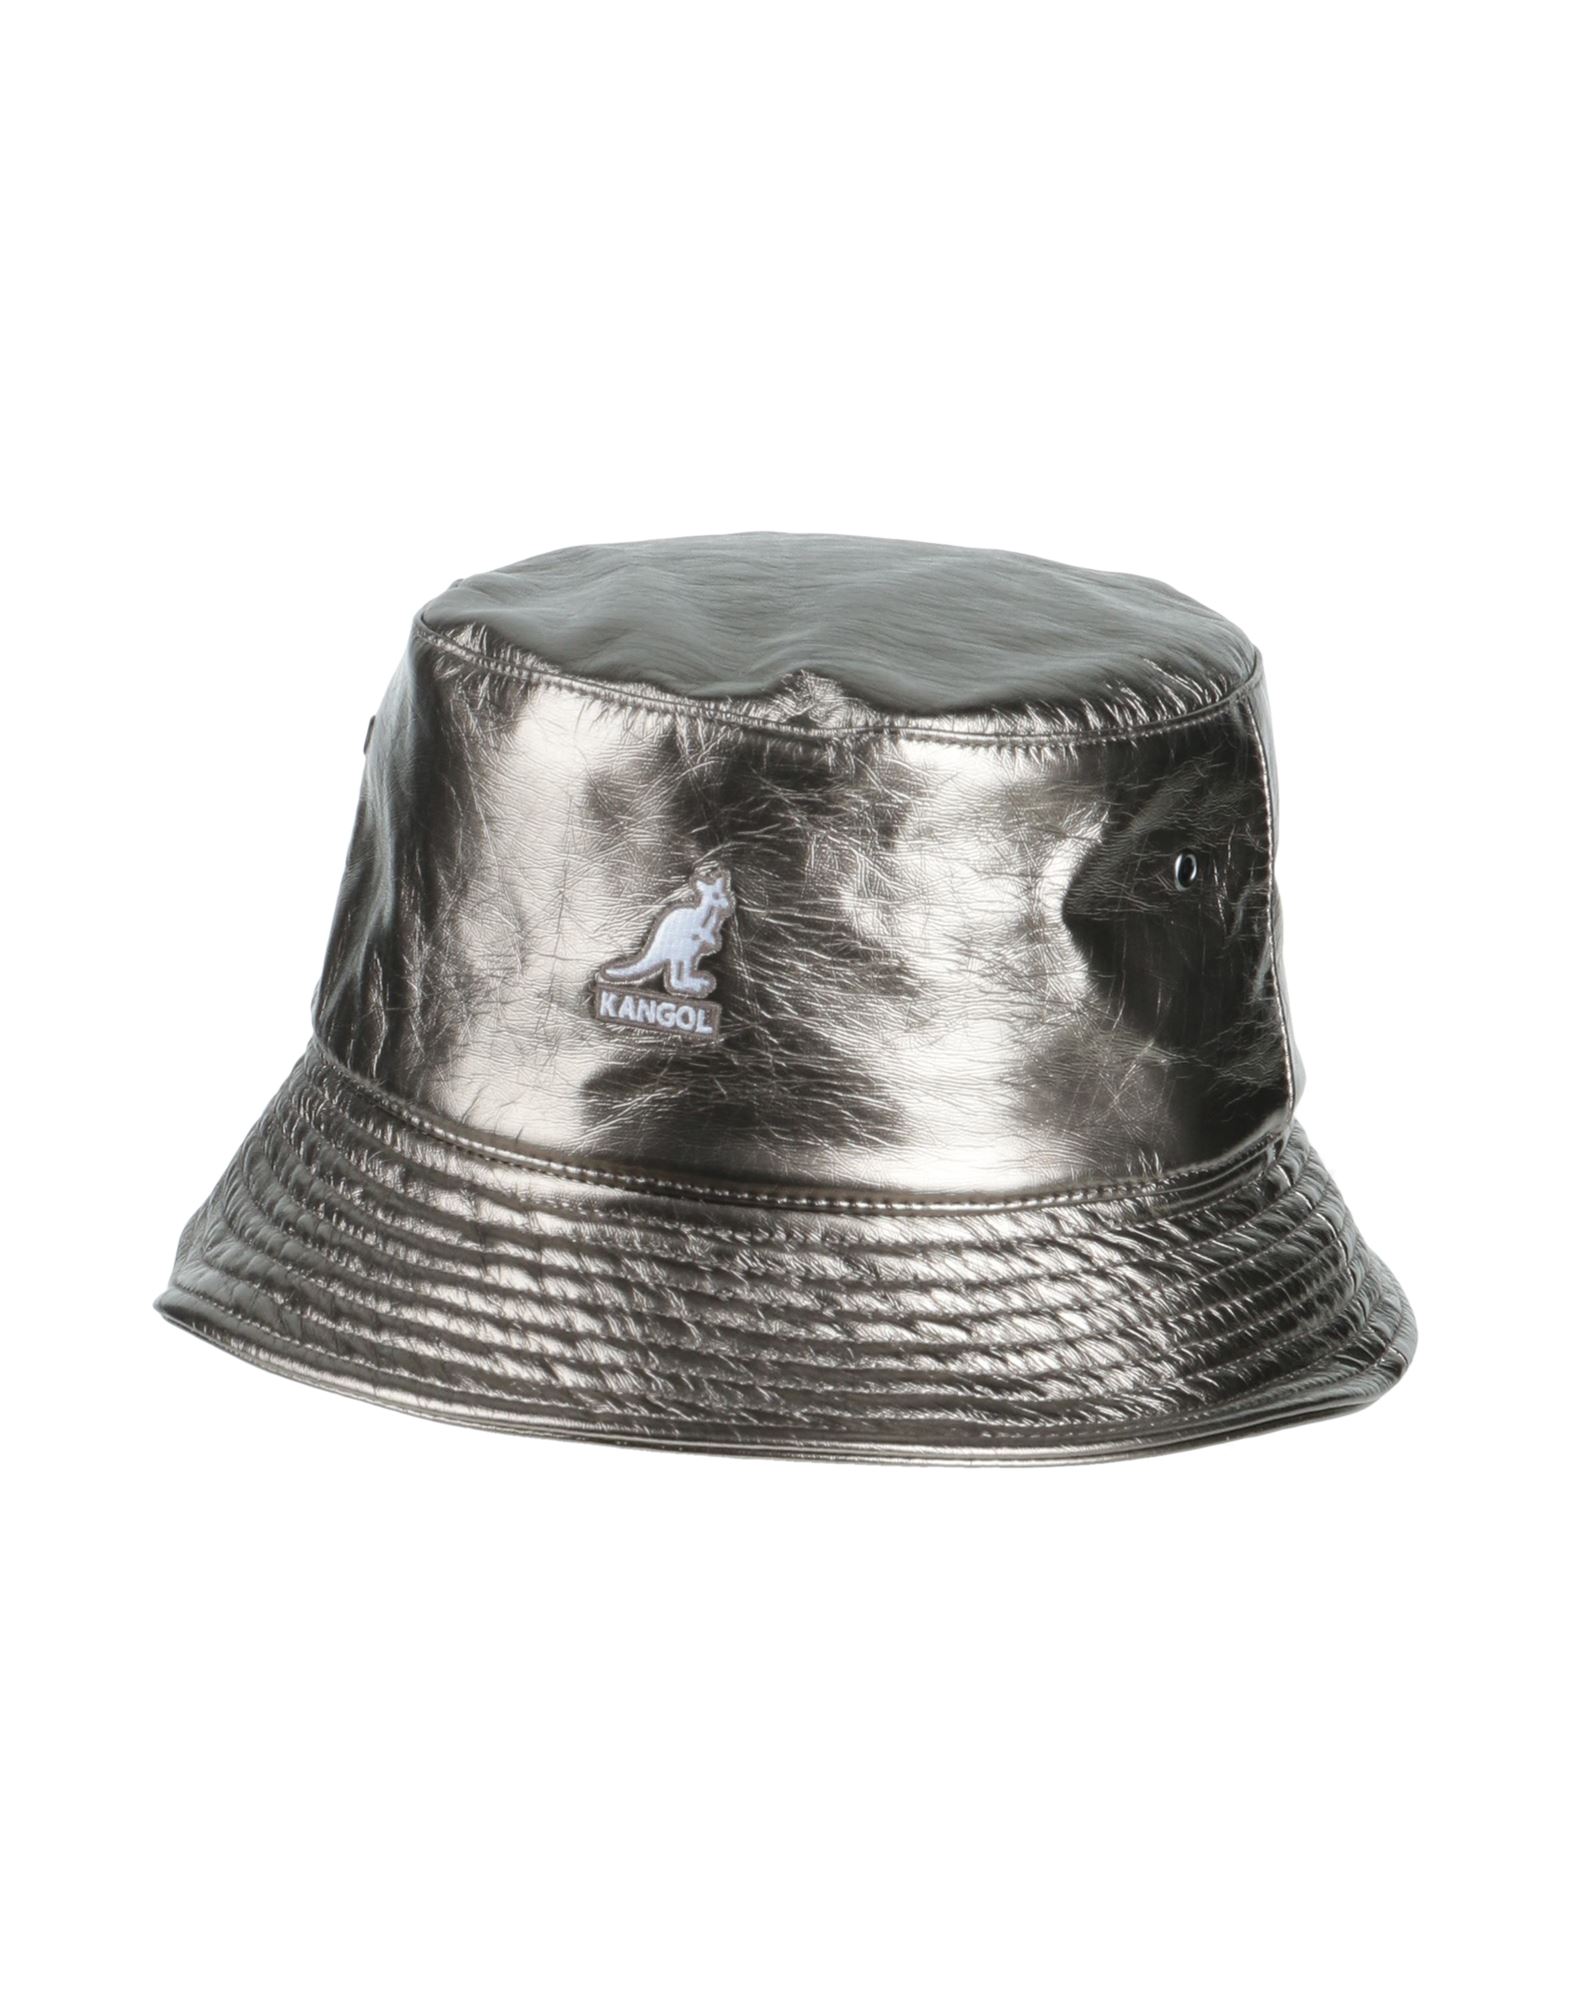 KANGOL Mützen & Hüte Damen Silber von KANGOL